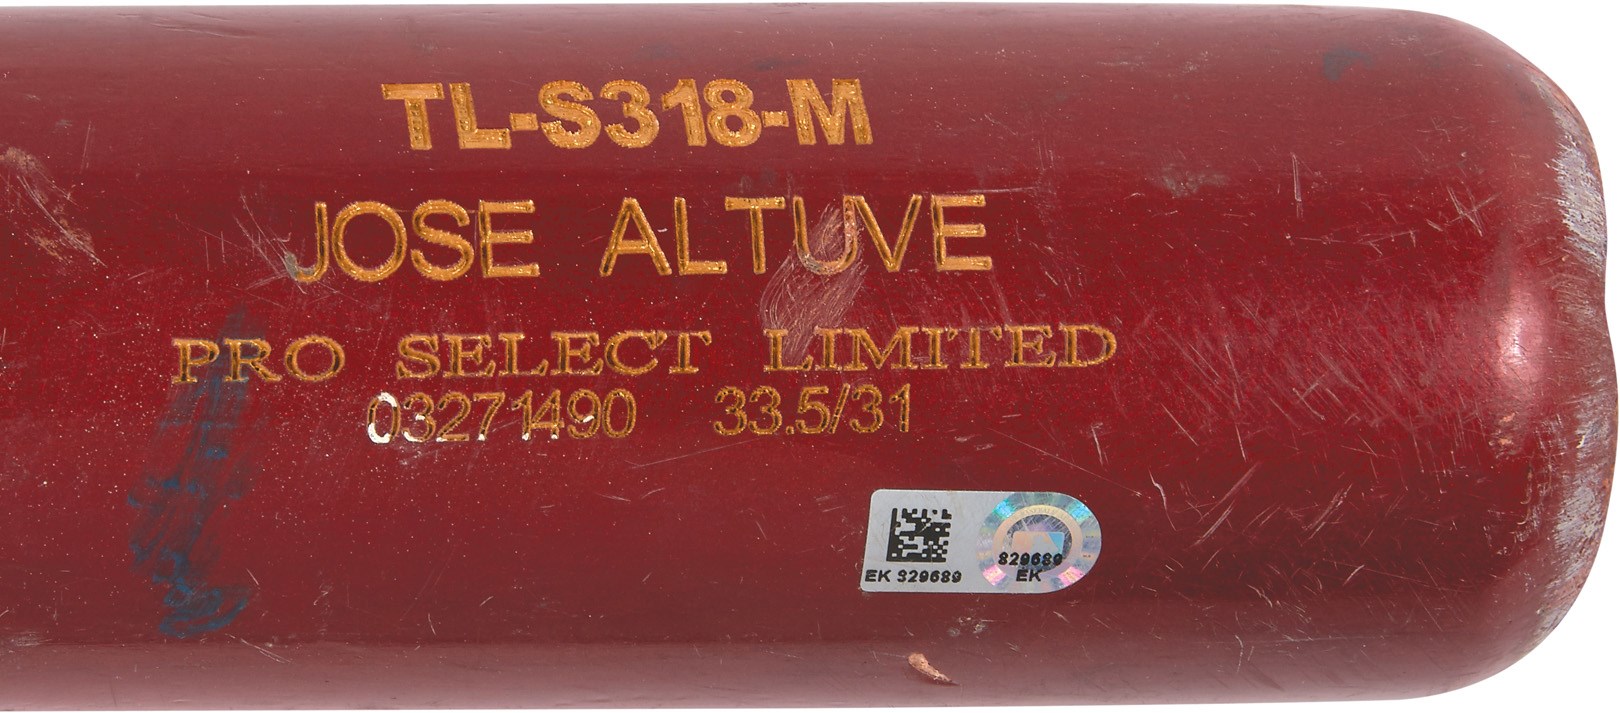 Baseball Equipment - 2014 Batting Champion Jose Altuve Game Used Astros Bat (MLB Auth. & Photo-Matched)